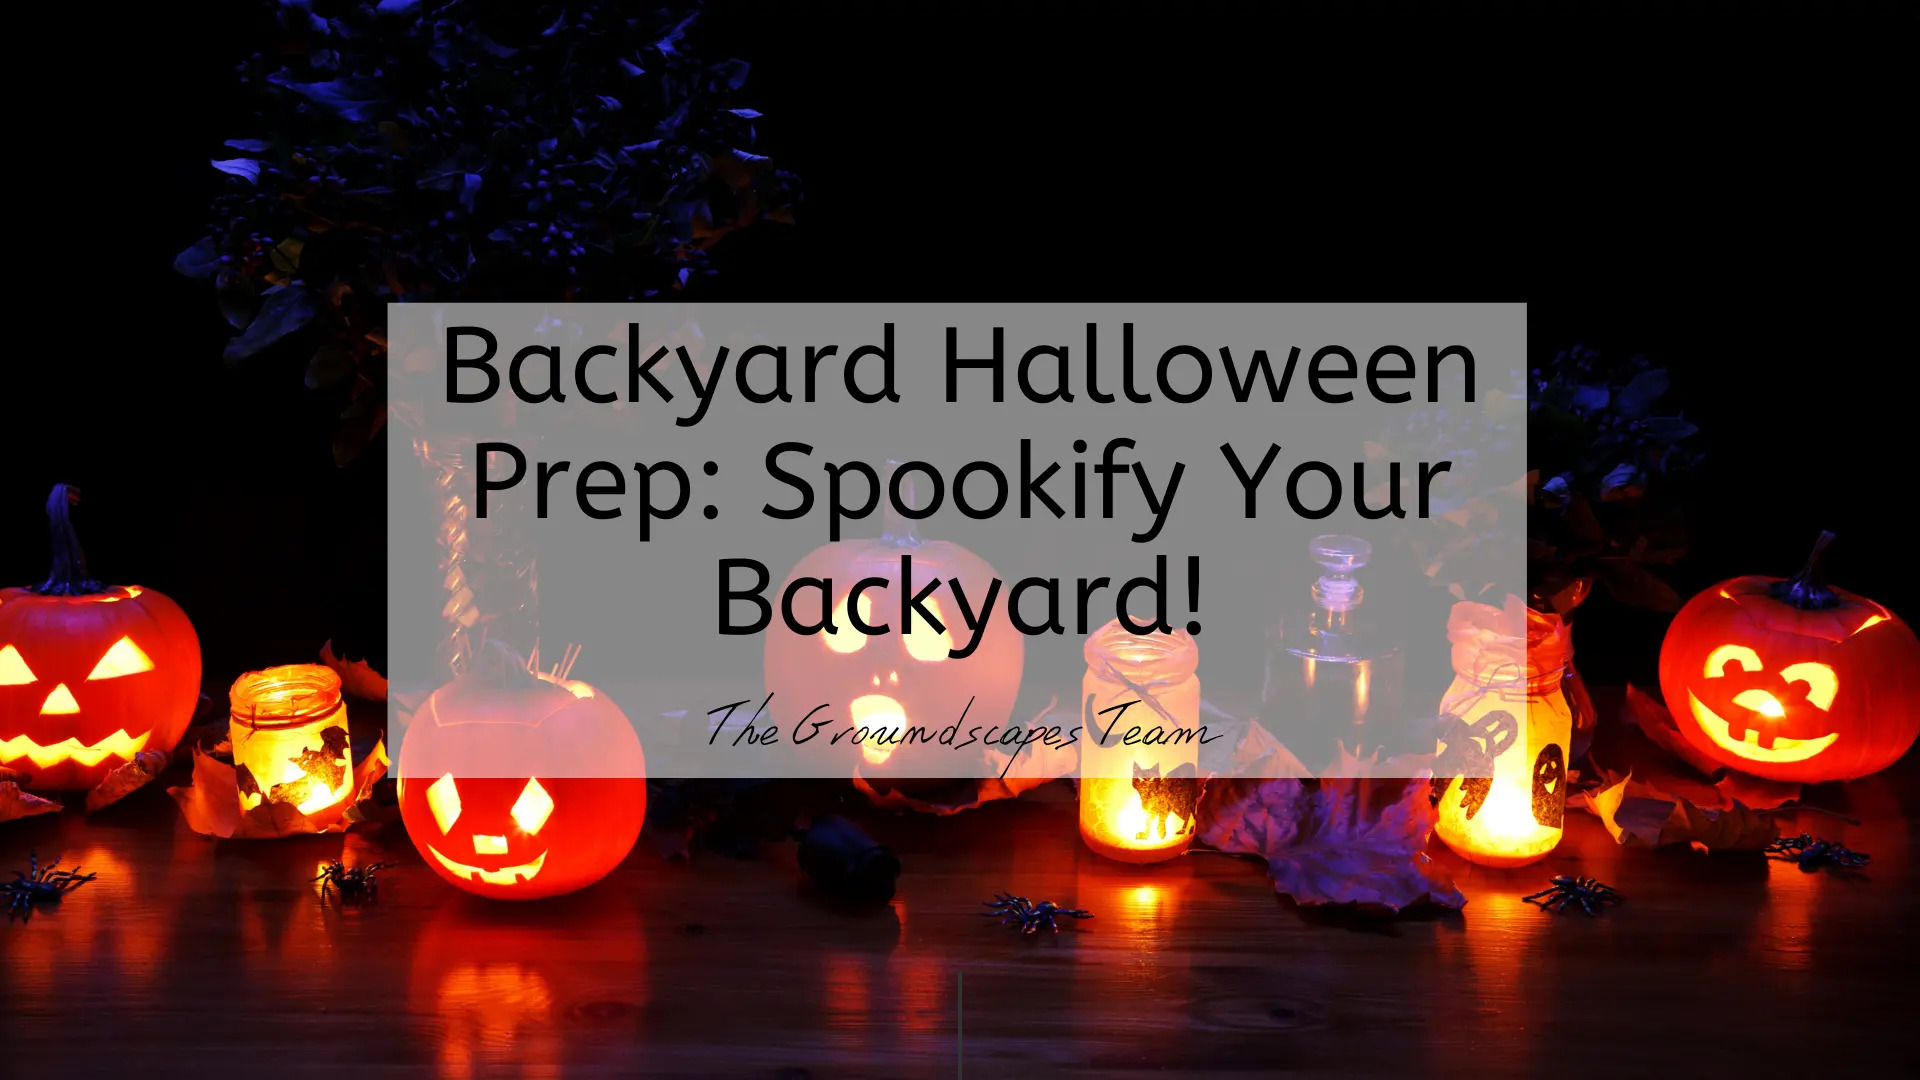 Backyard Halloween Prep: Spookify Your Backyard!